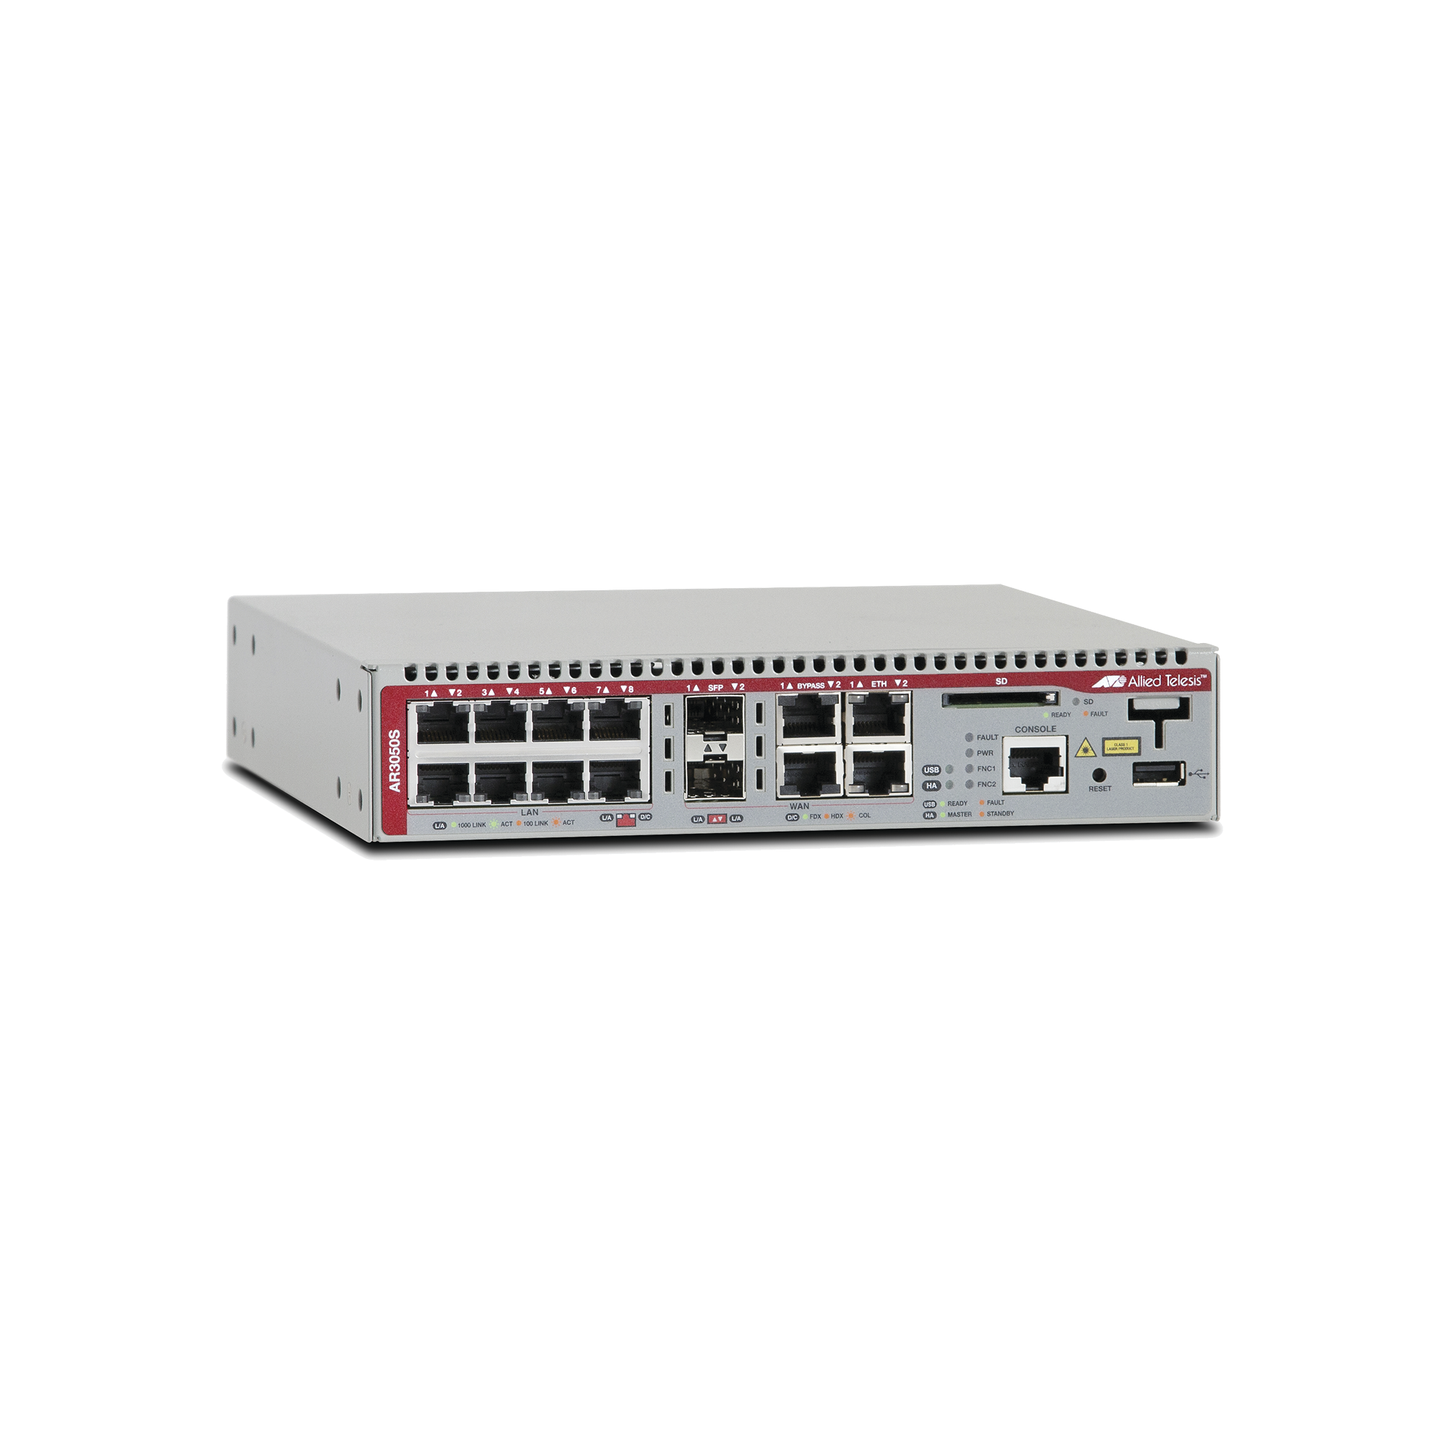 Firewall de Nueva Generación, con 2 puertos WAN Gigabit Combo + 8 puertos LAN Gigabit